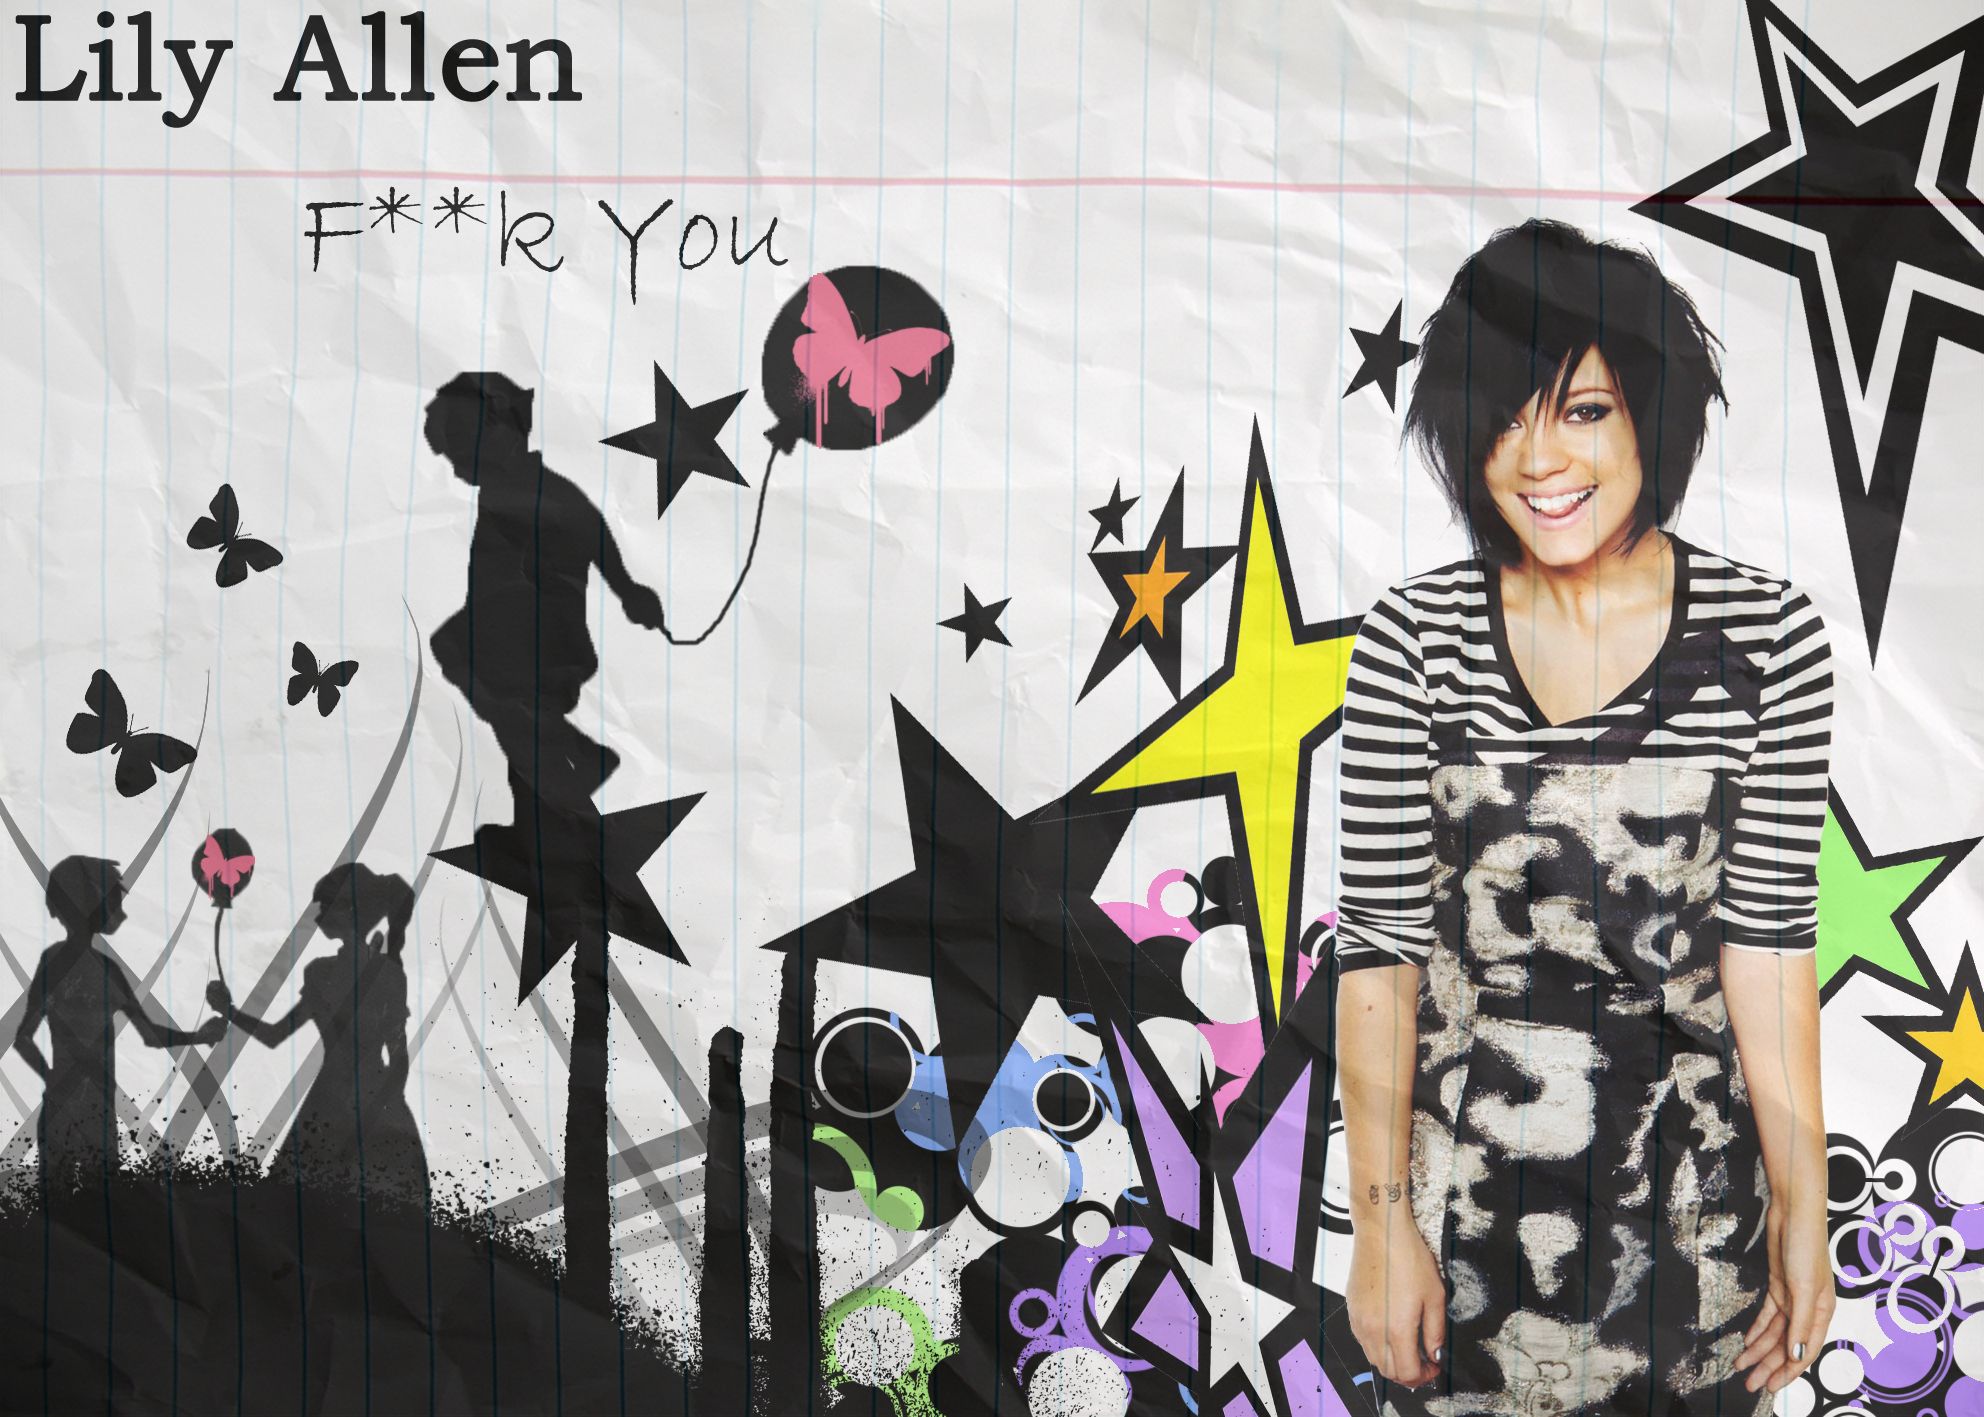 Lily Allen FUCK YOU Wallpaper - Lily Allen Photo 11905883 - Fanpop